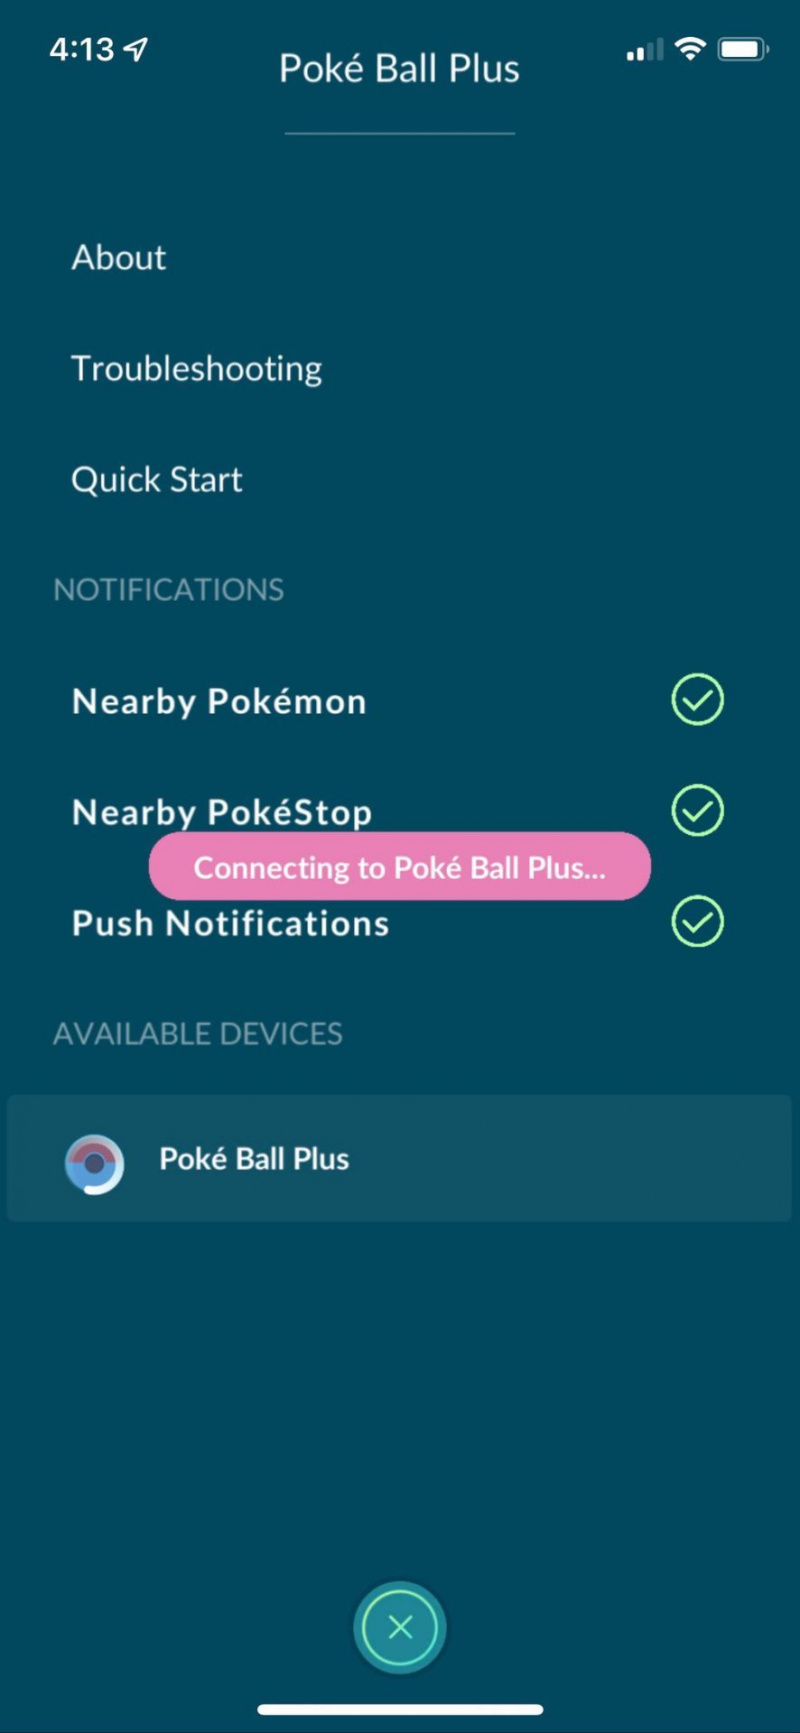   Poke Ball Plus ஐ Pokémon Go உடன் இணைக்கவும், கண்டுபிடிக்கப்பட்டதும் Poke Ball Plus என்பதைத் தேர்ந்தெடுக்கவும்